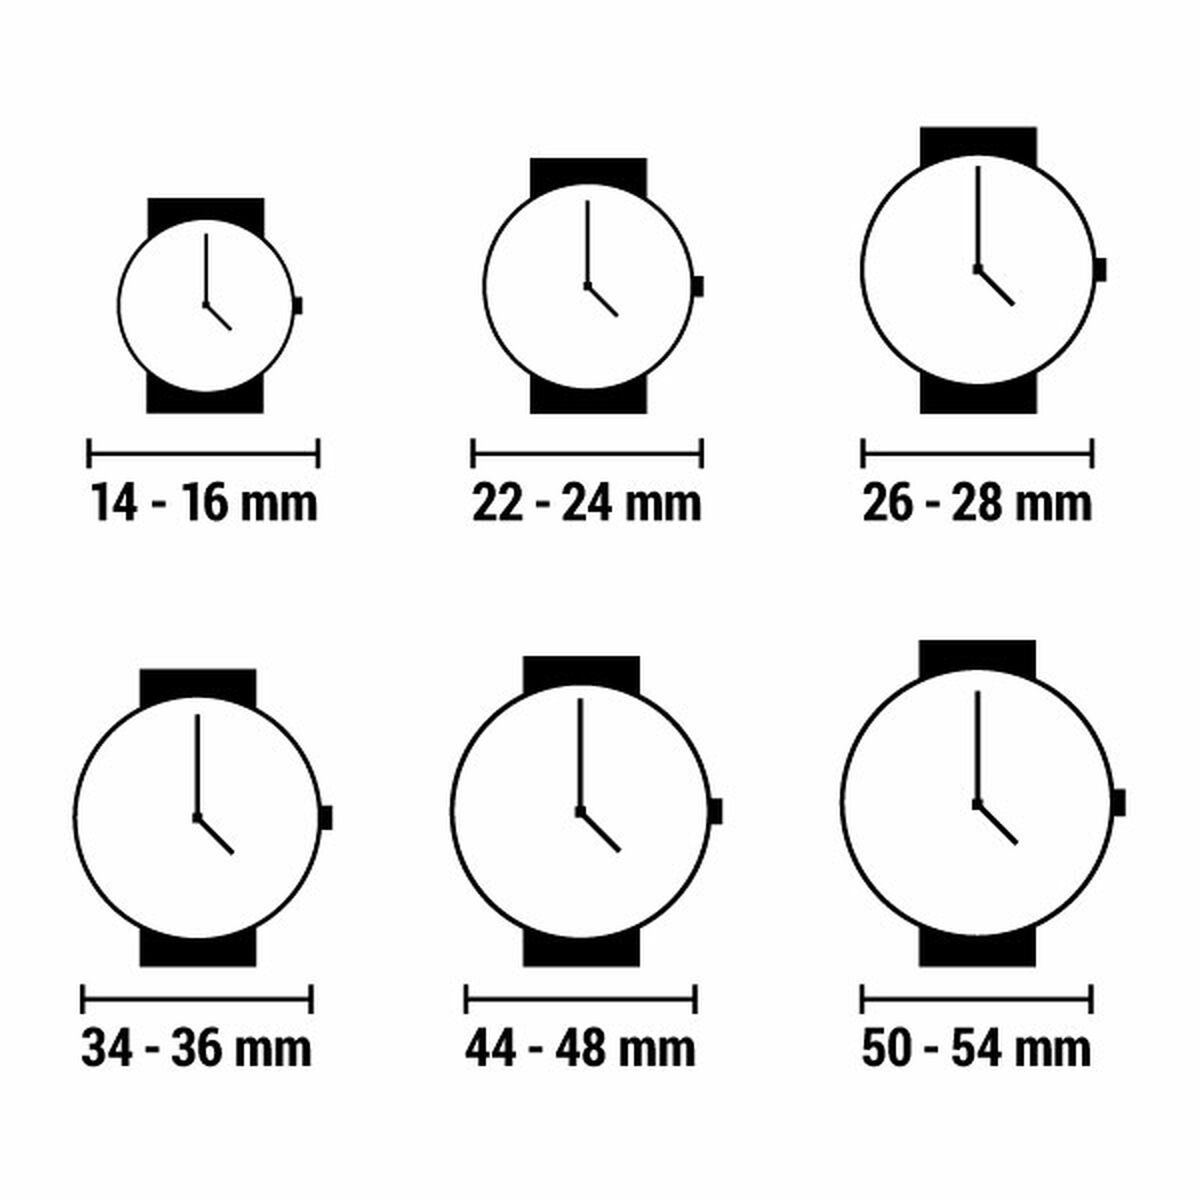 Horloge Dames Chiara Ferragni R1953103507 (Ø 34 mm)